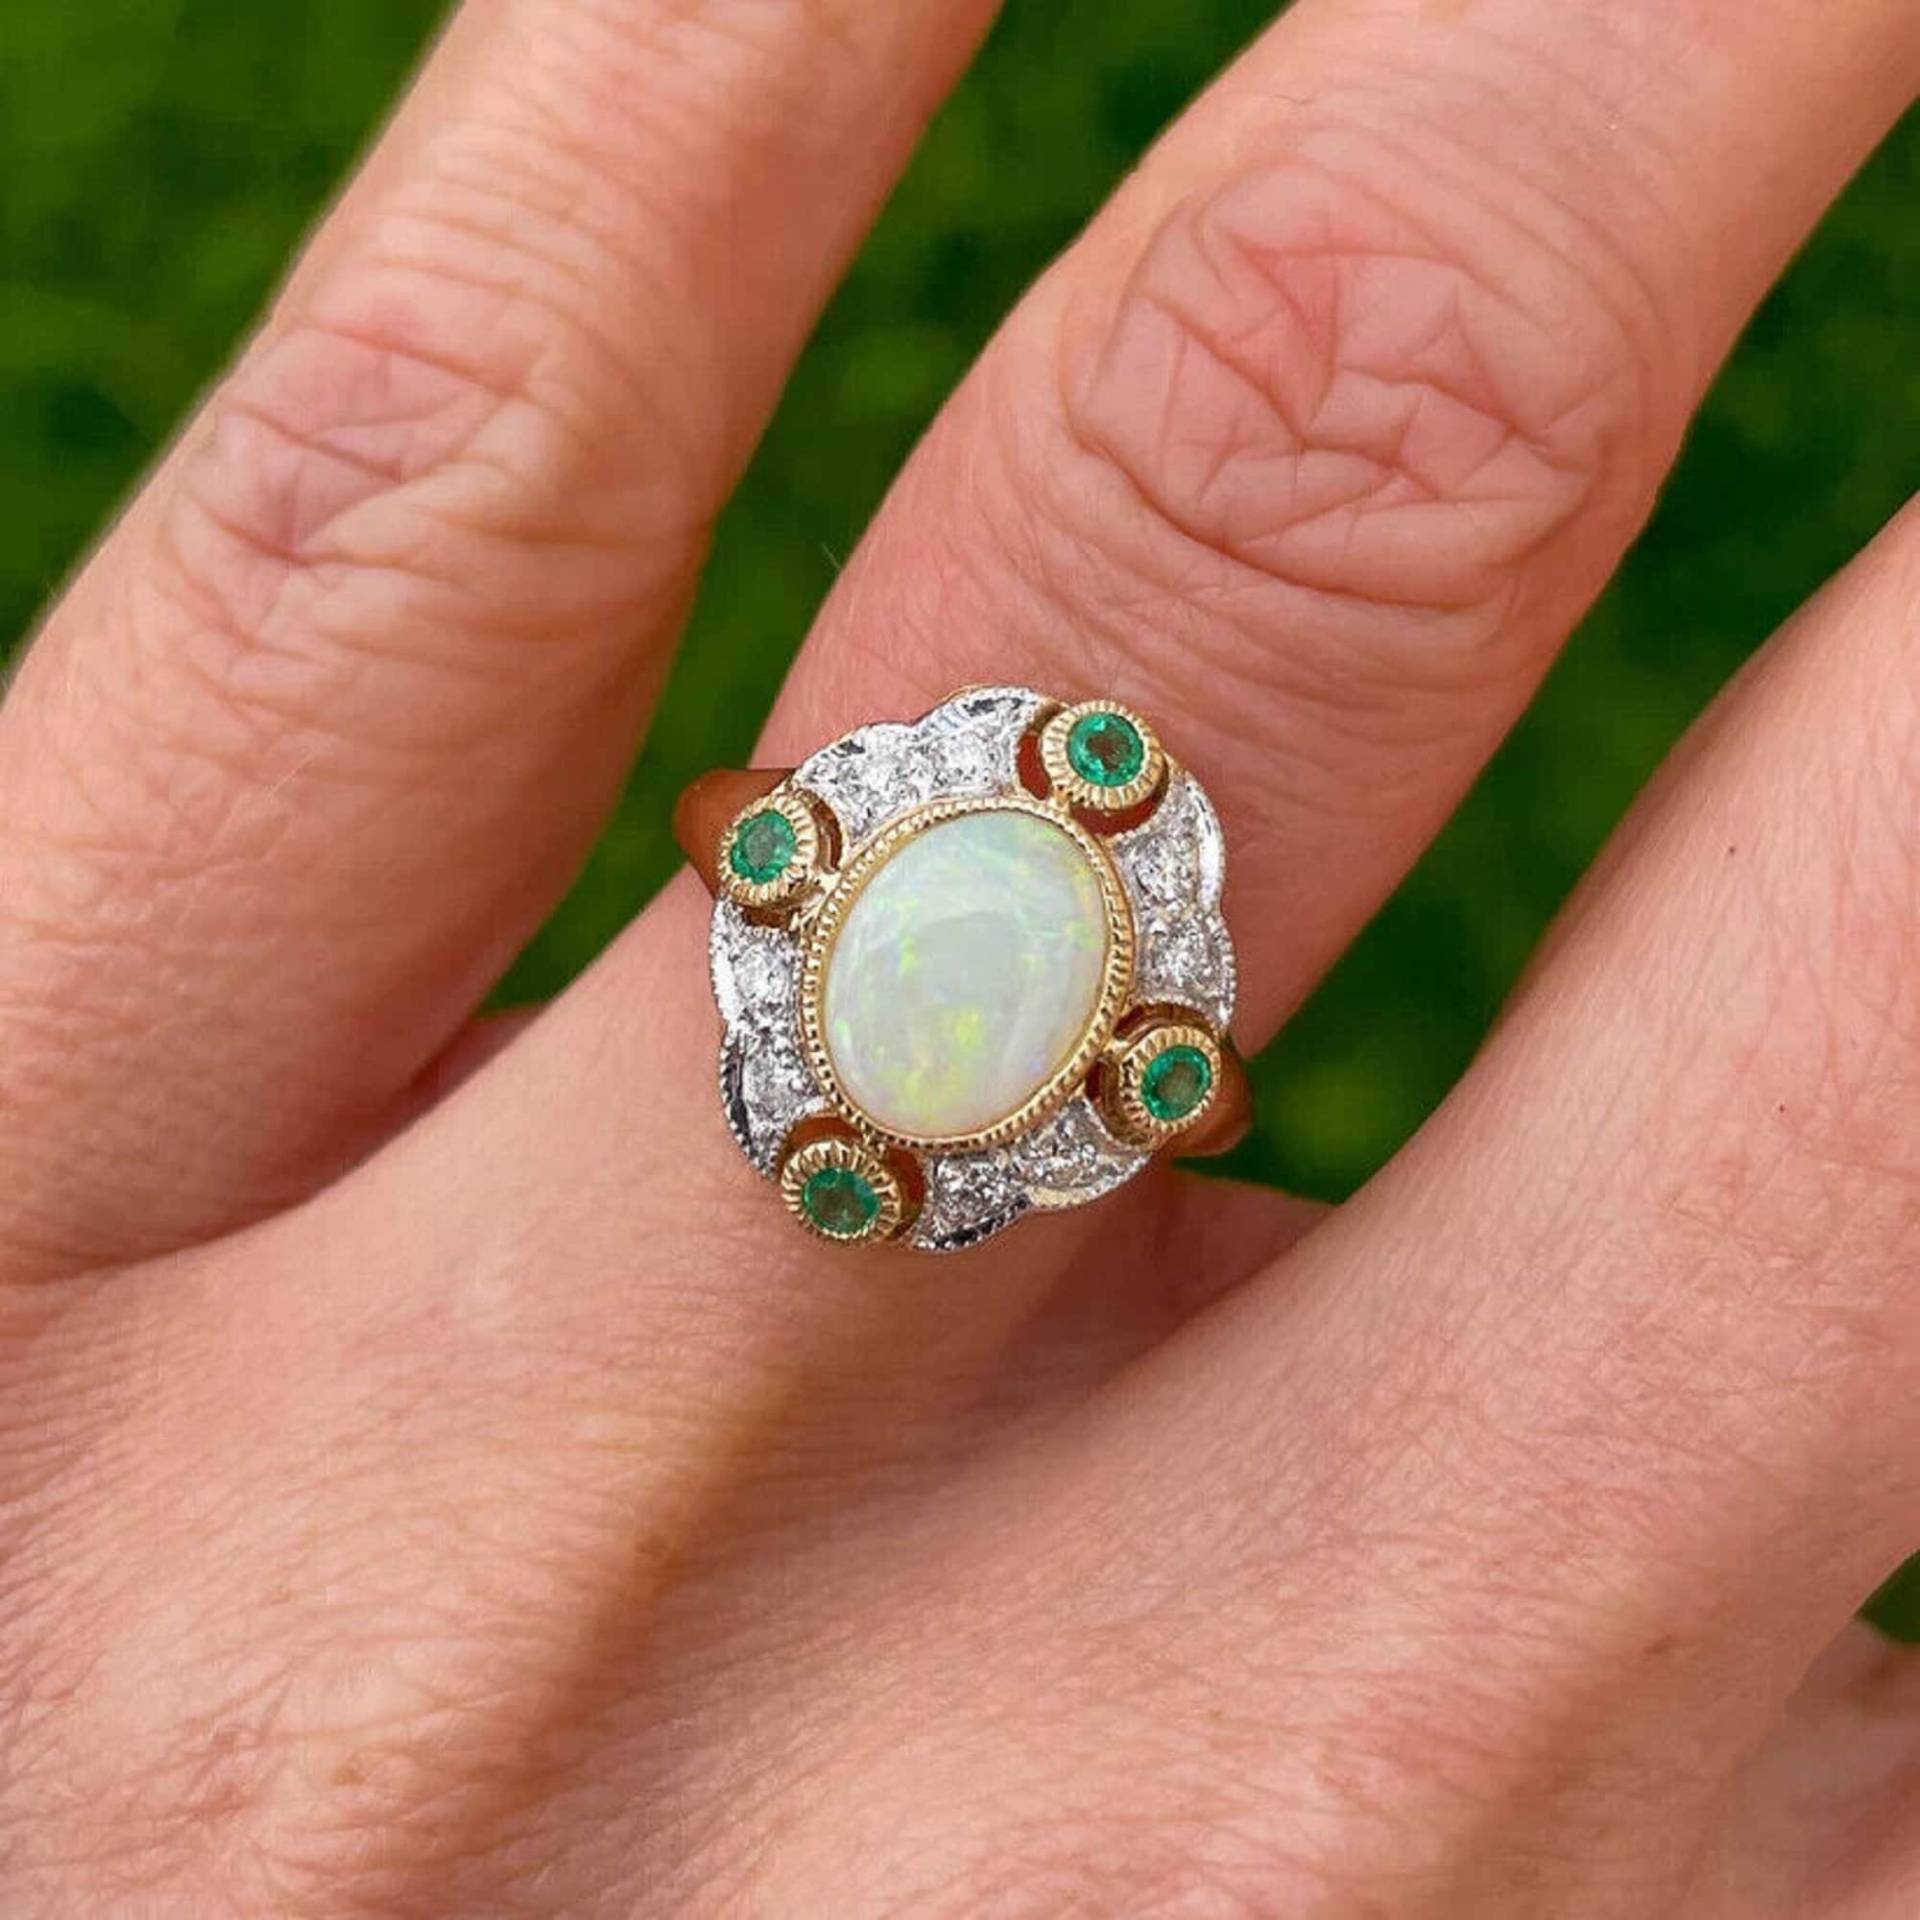 3 Kt Oval Cut Feuer Opal & Diamant Art Deco Ring, Verlobungsring, Ehering, Vintage Ring Simulierter 14Kt Gelbgold Finish von DeevishJewels